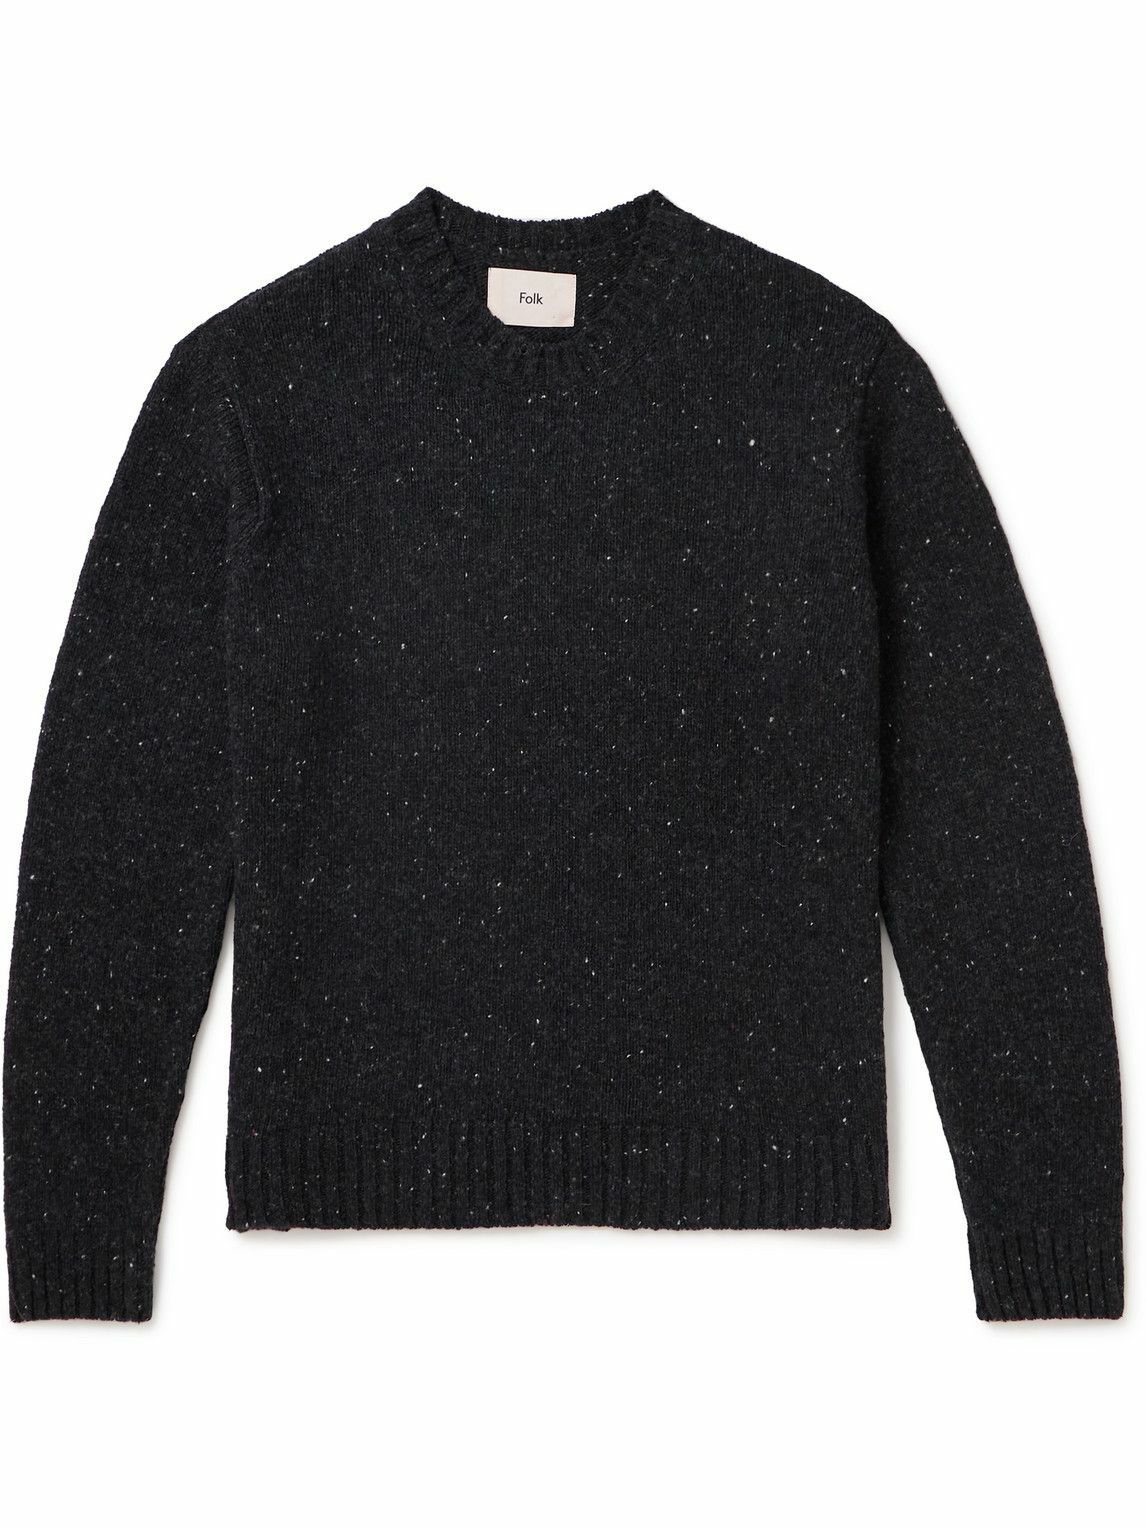 Folk - Wool-Blend Sweater - Gray Folk